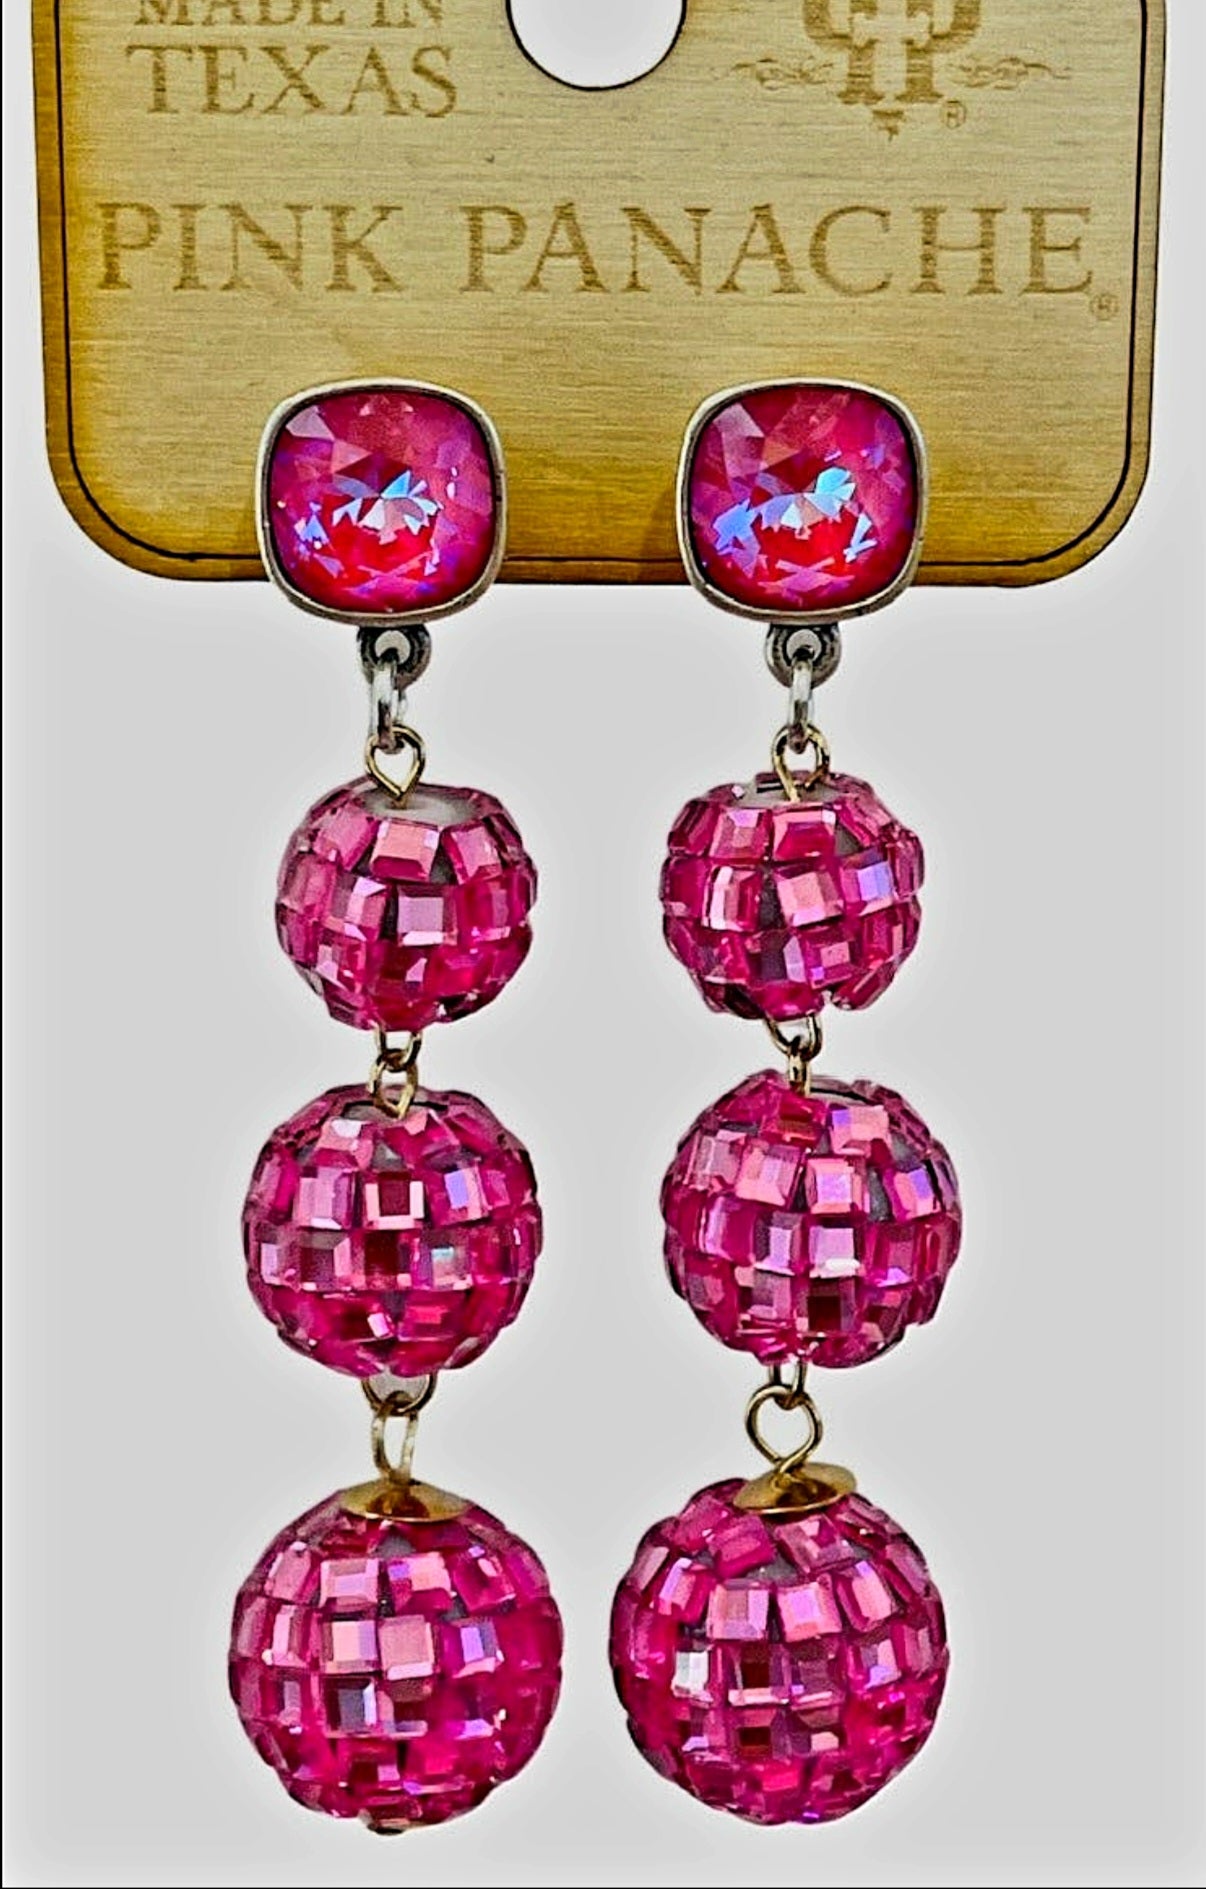 Pink Panache Hot Pink Rhinestone on Hot Pink Bell Bead shaped Earring